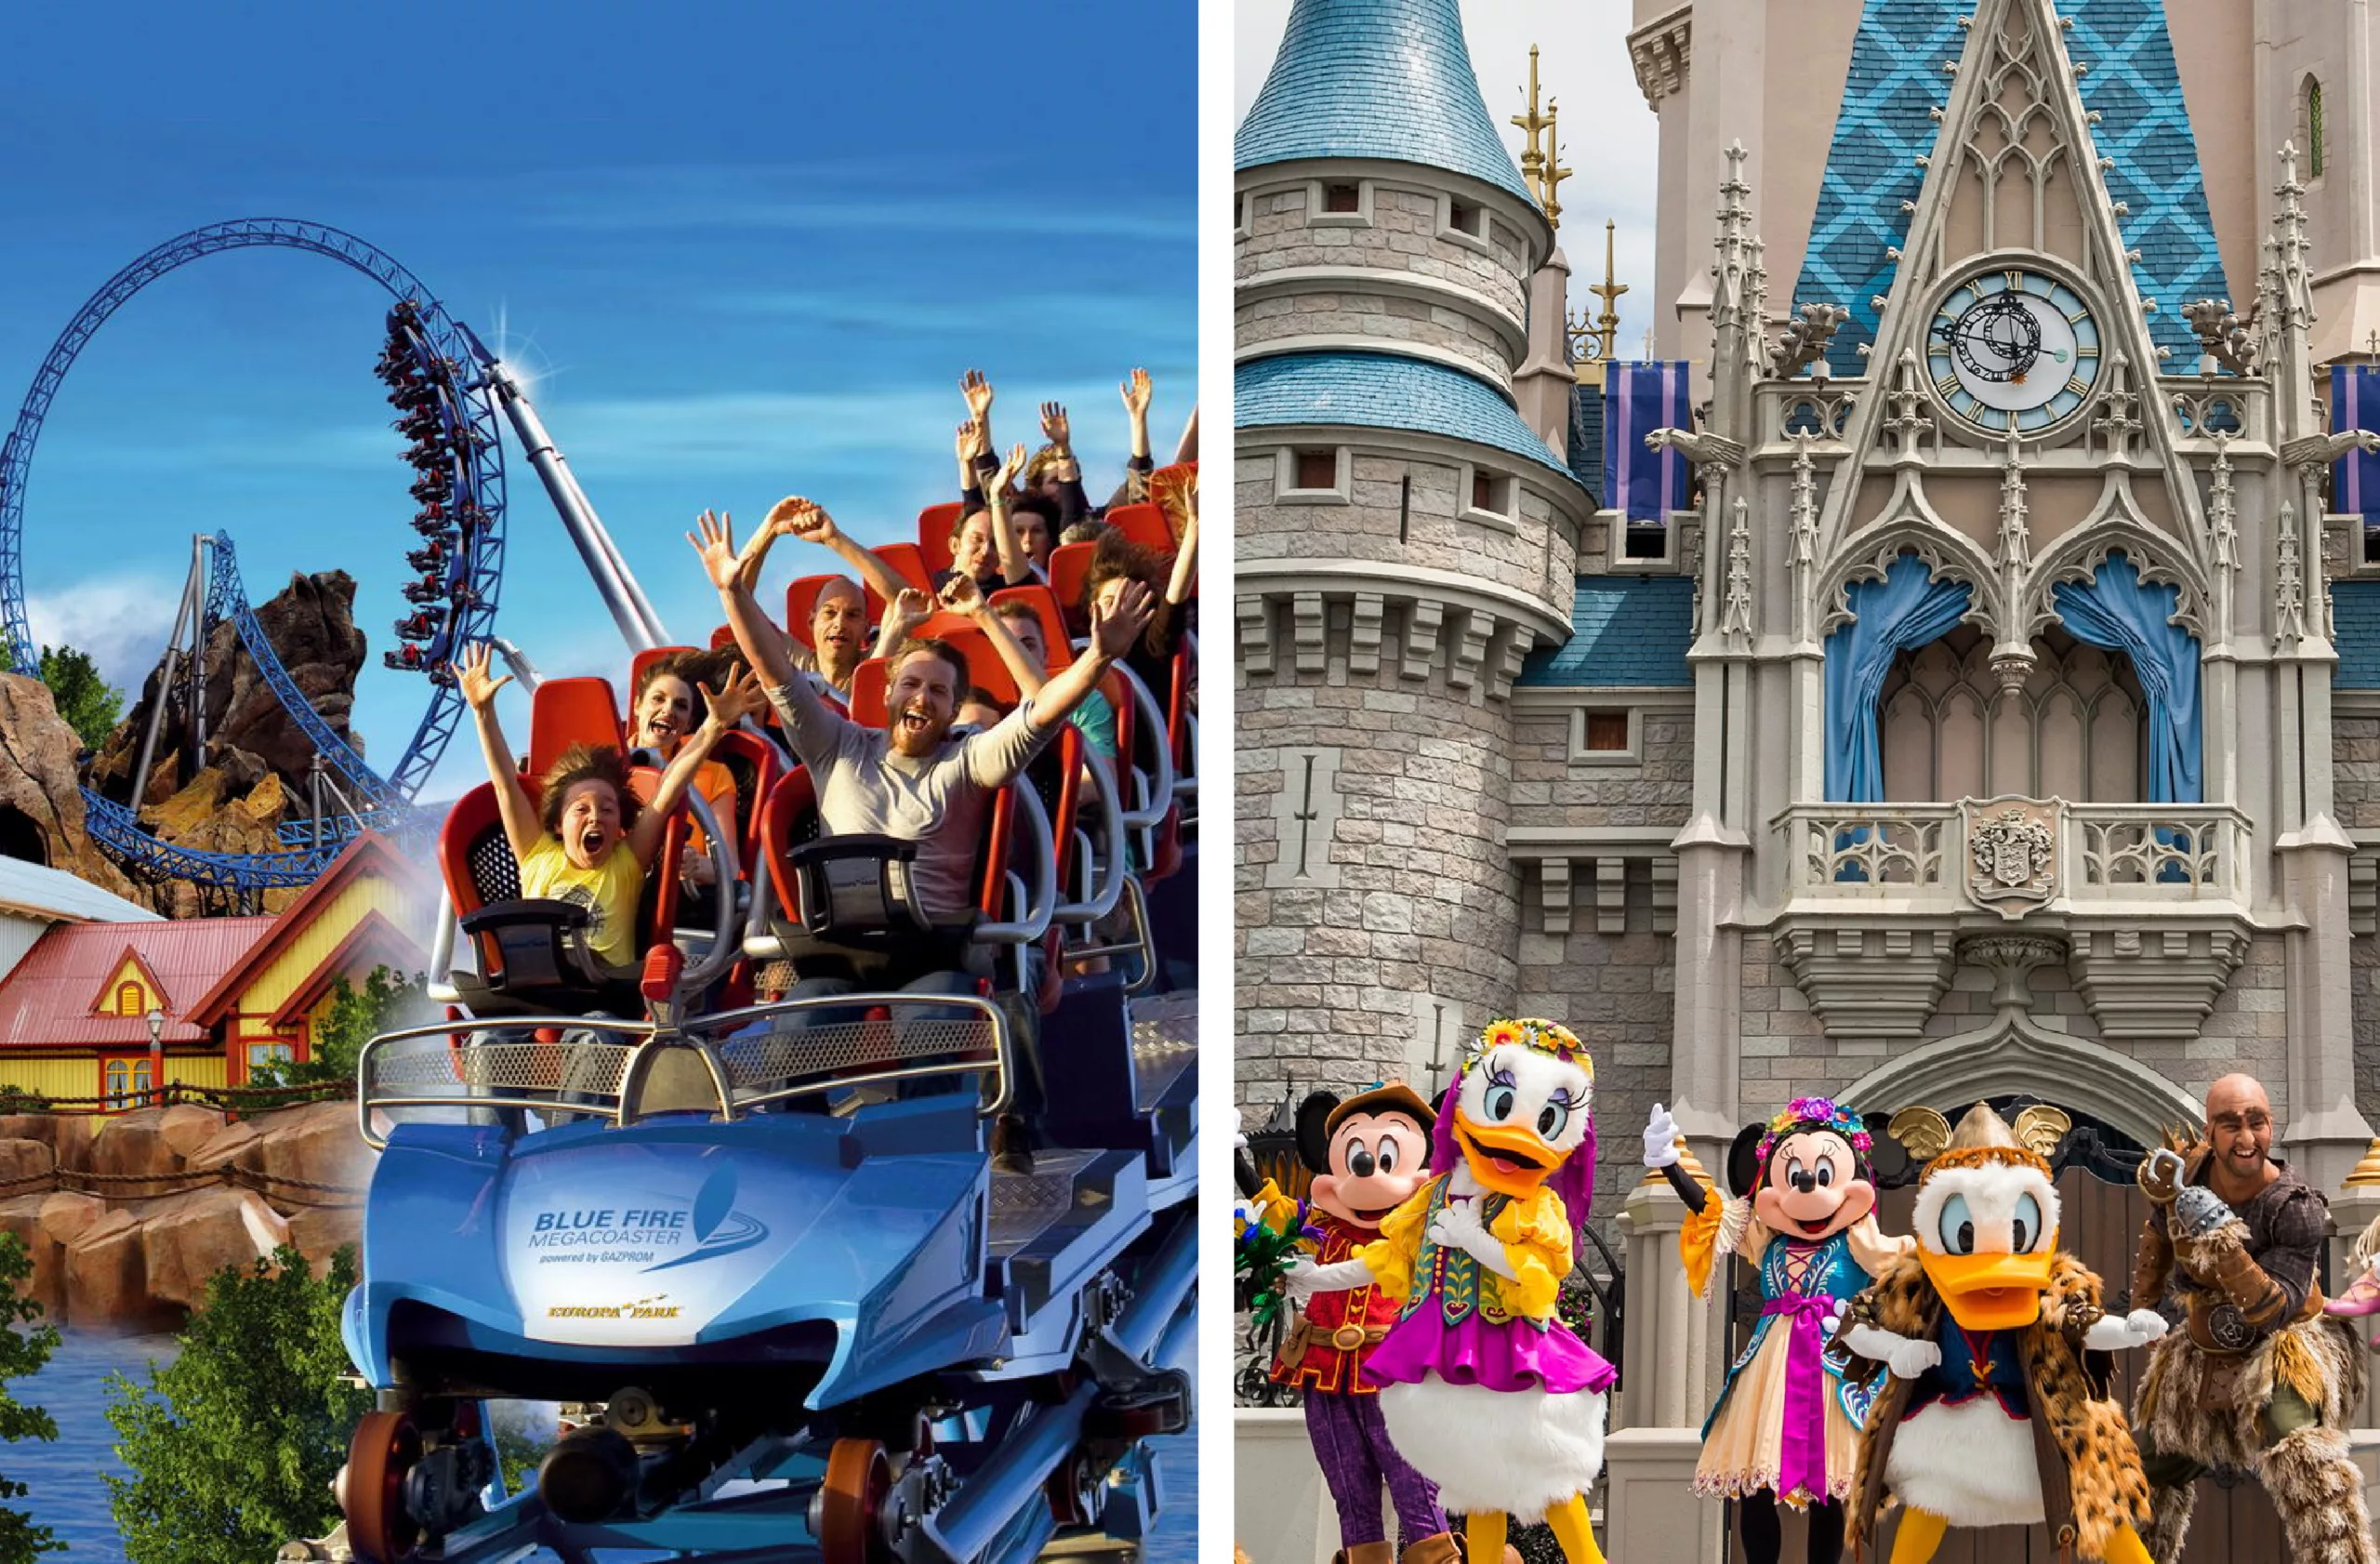 Europa Park vs. Disney’s Magic Kingdom – Which Is Better?